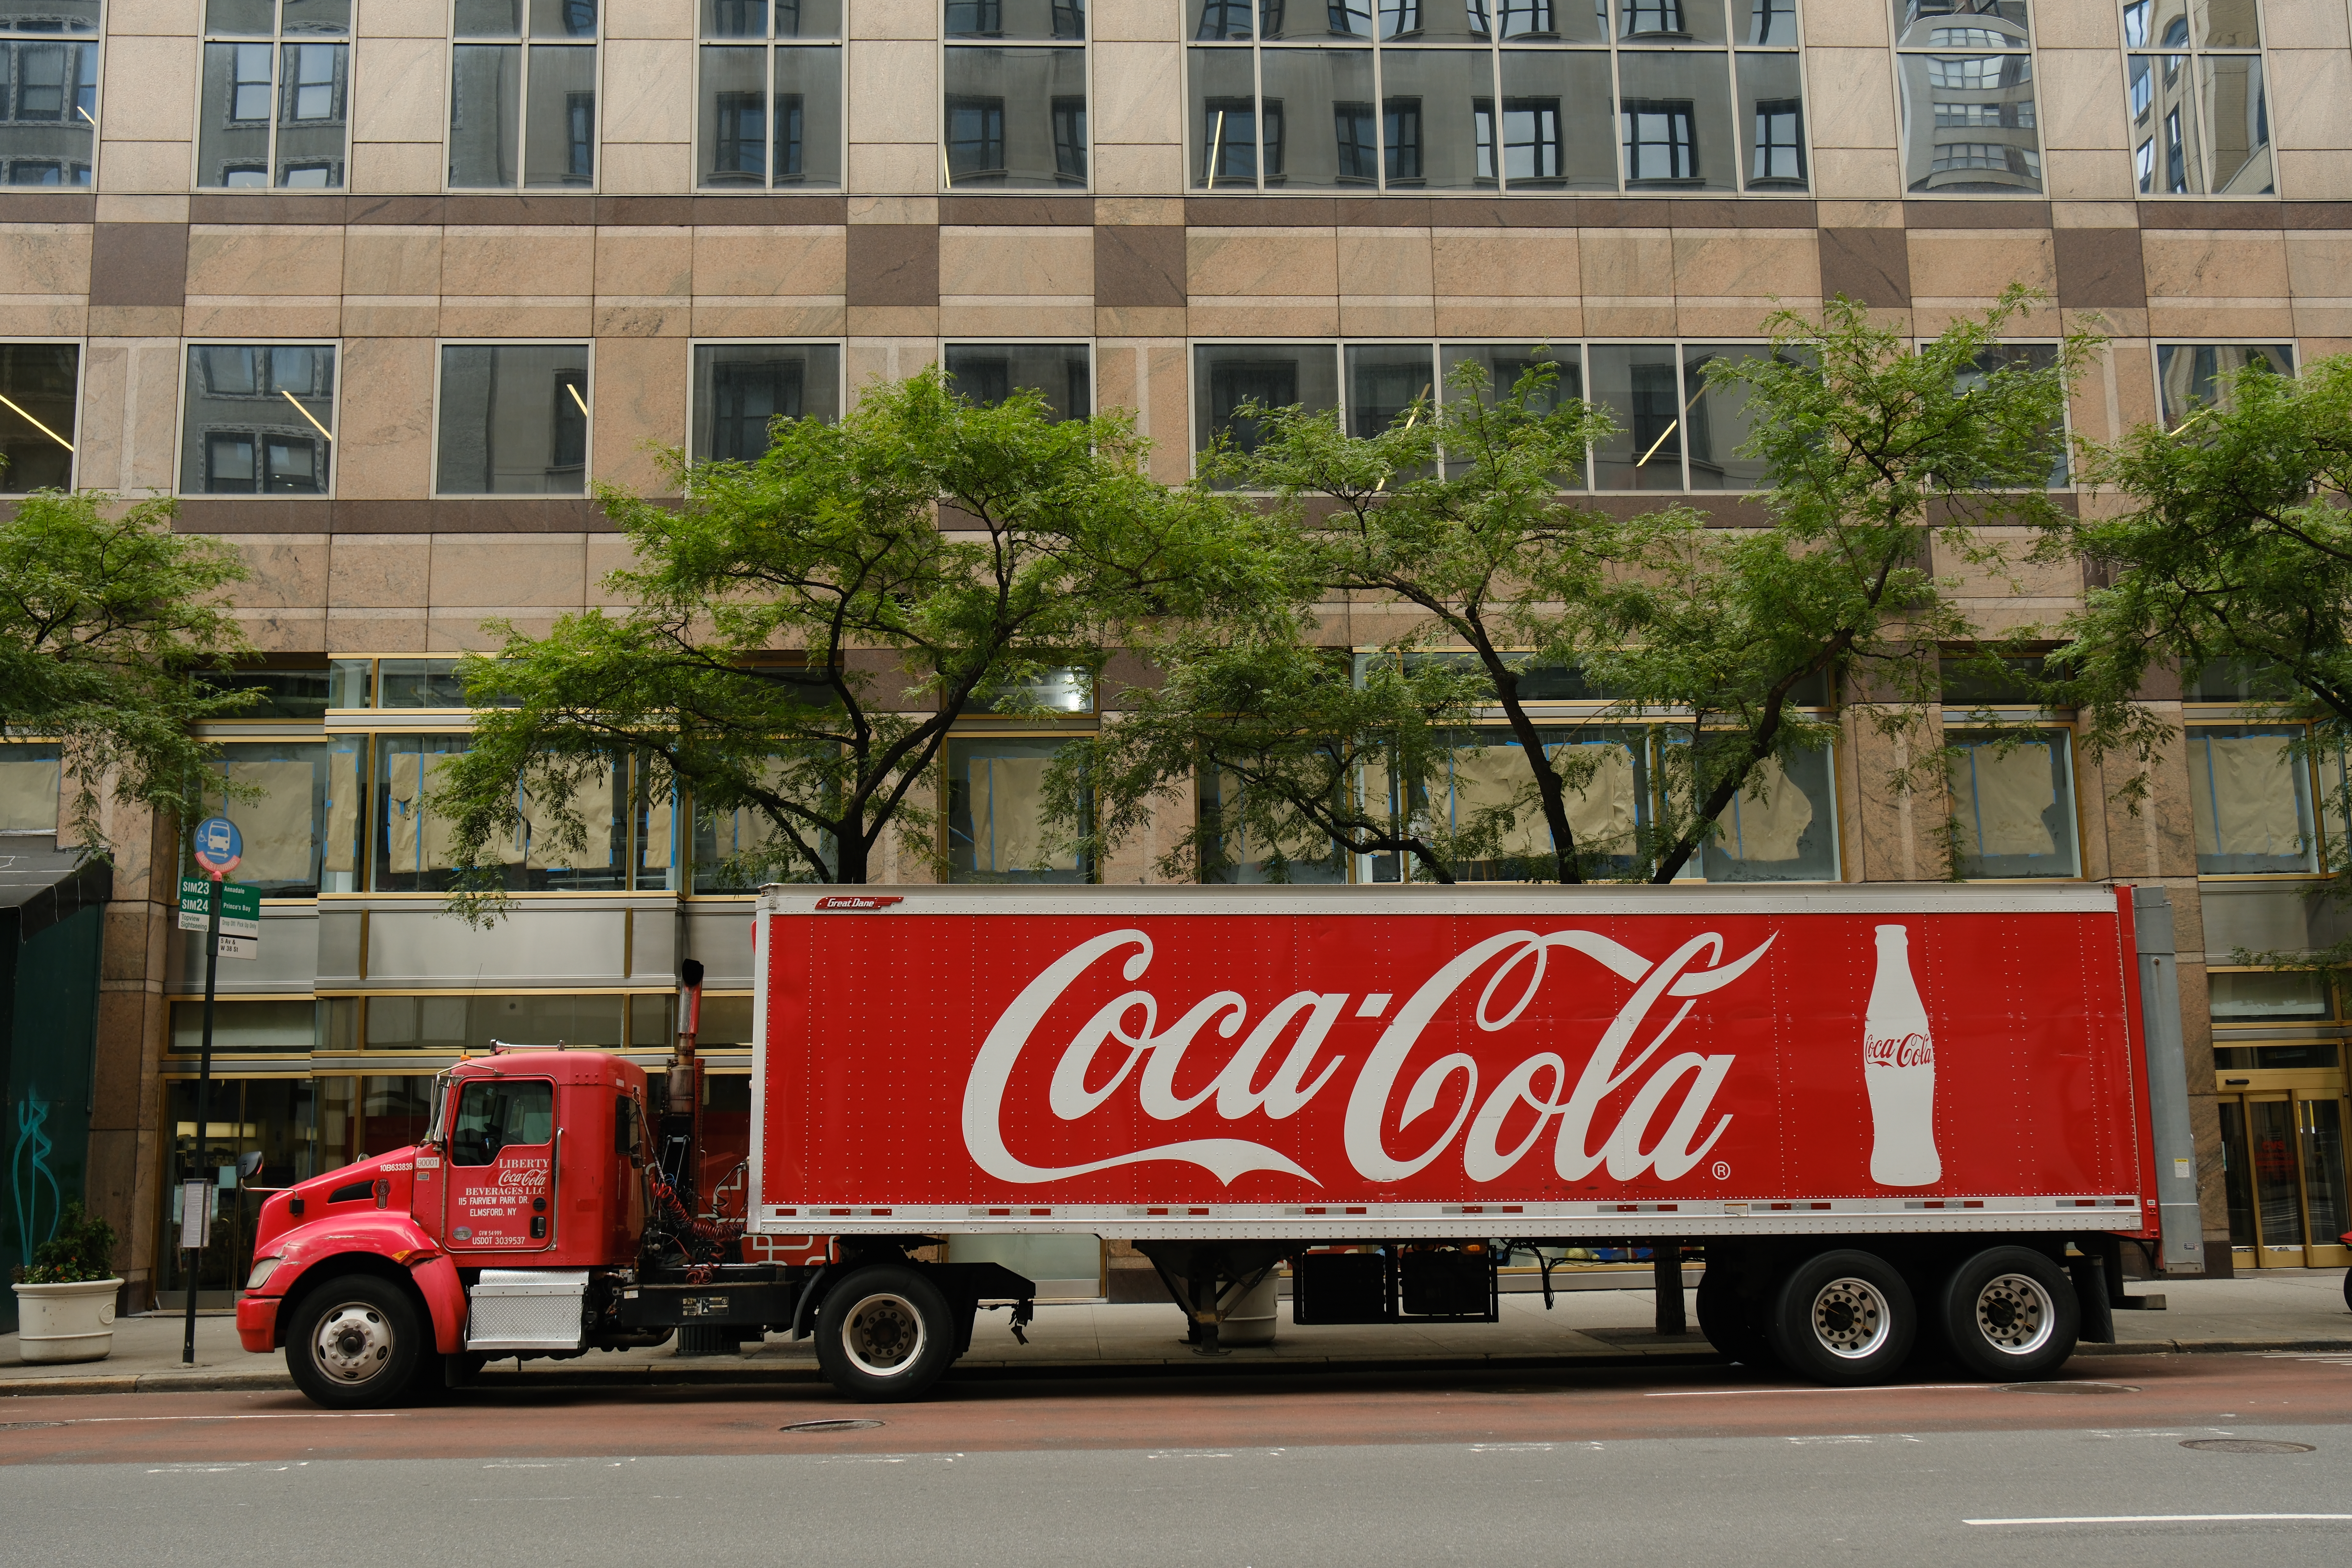 Coca-cola truck, New York, X-H2, 1/180s, f/4.5, ISO250, 23mm, -0.3EV, Joshua Waller